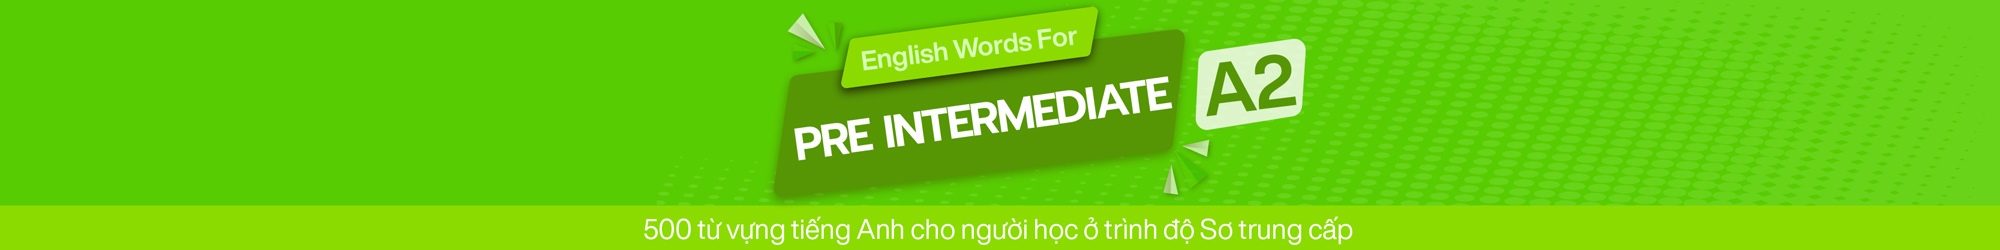 English Words For Pre Intermediate (A2)